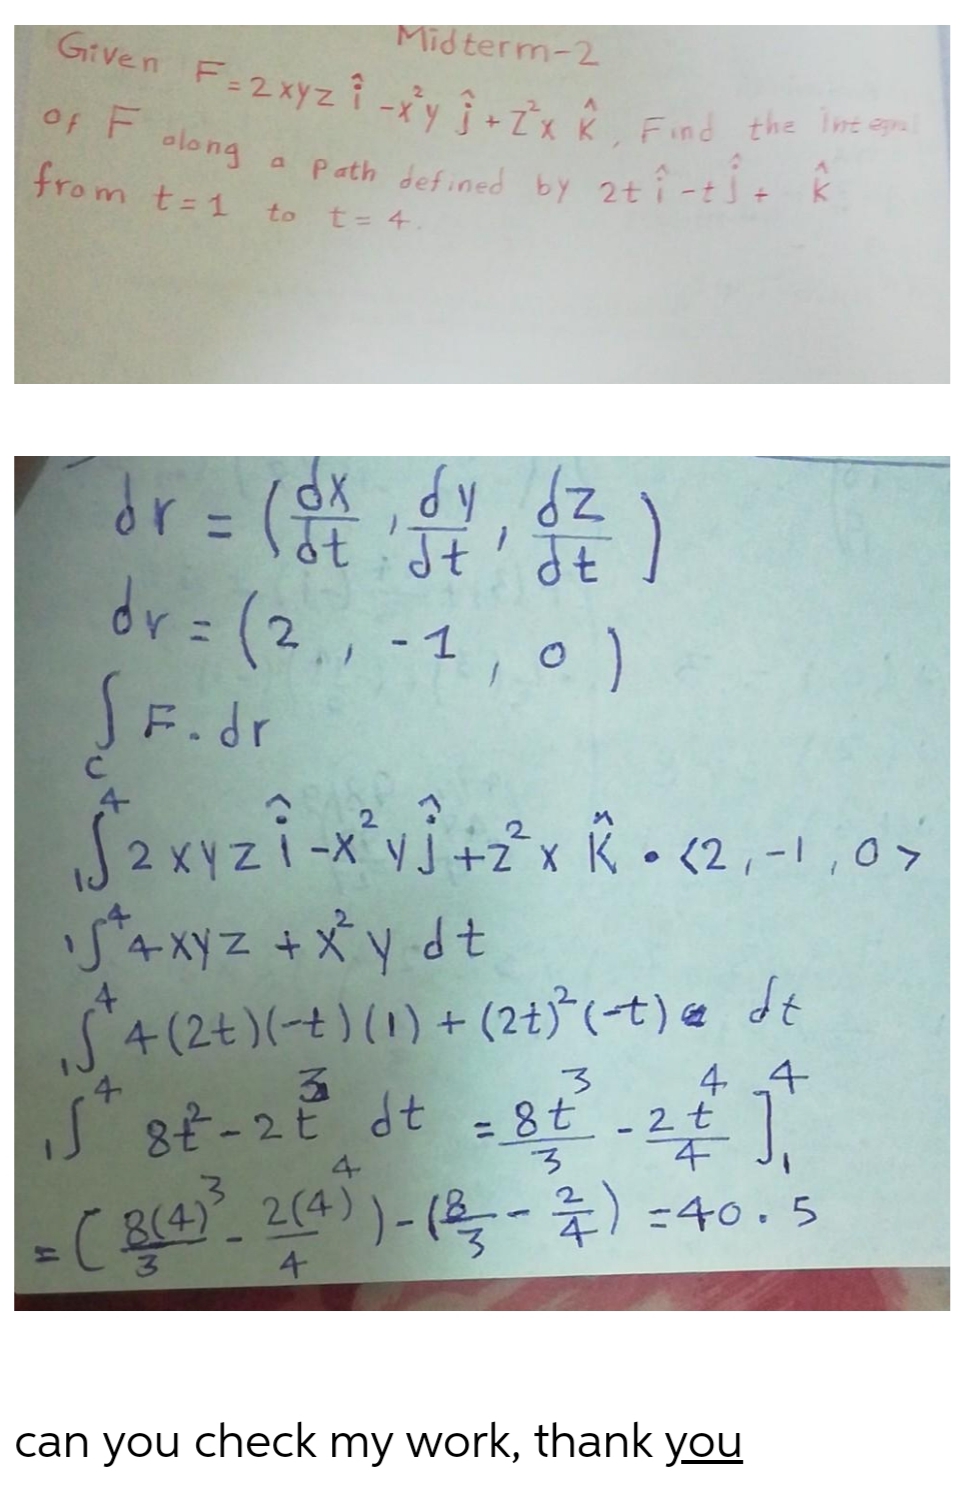 Midterm-2
Gitven F-2xyzî -y Î7 2 Find the Io
Of F olong
elong a Path def ned by 2ti-ti. k
from t-1
to
t= 4.
re (製)
ot Jt' Jt
dr = (2,, -1
SF.dr
,0)
2 XV
-X y j+z°x K • (2,-1,0>
54xyz +Xydt
S4 (2t)(-t) (1) + (2t)*(-t) e dt
4 4
4
S8t-2E dt = 8t -2t
%3D
4
-(B(4) 2(4))- (-) =40. 5
3.
4
can you check my work, thank you
